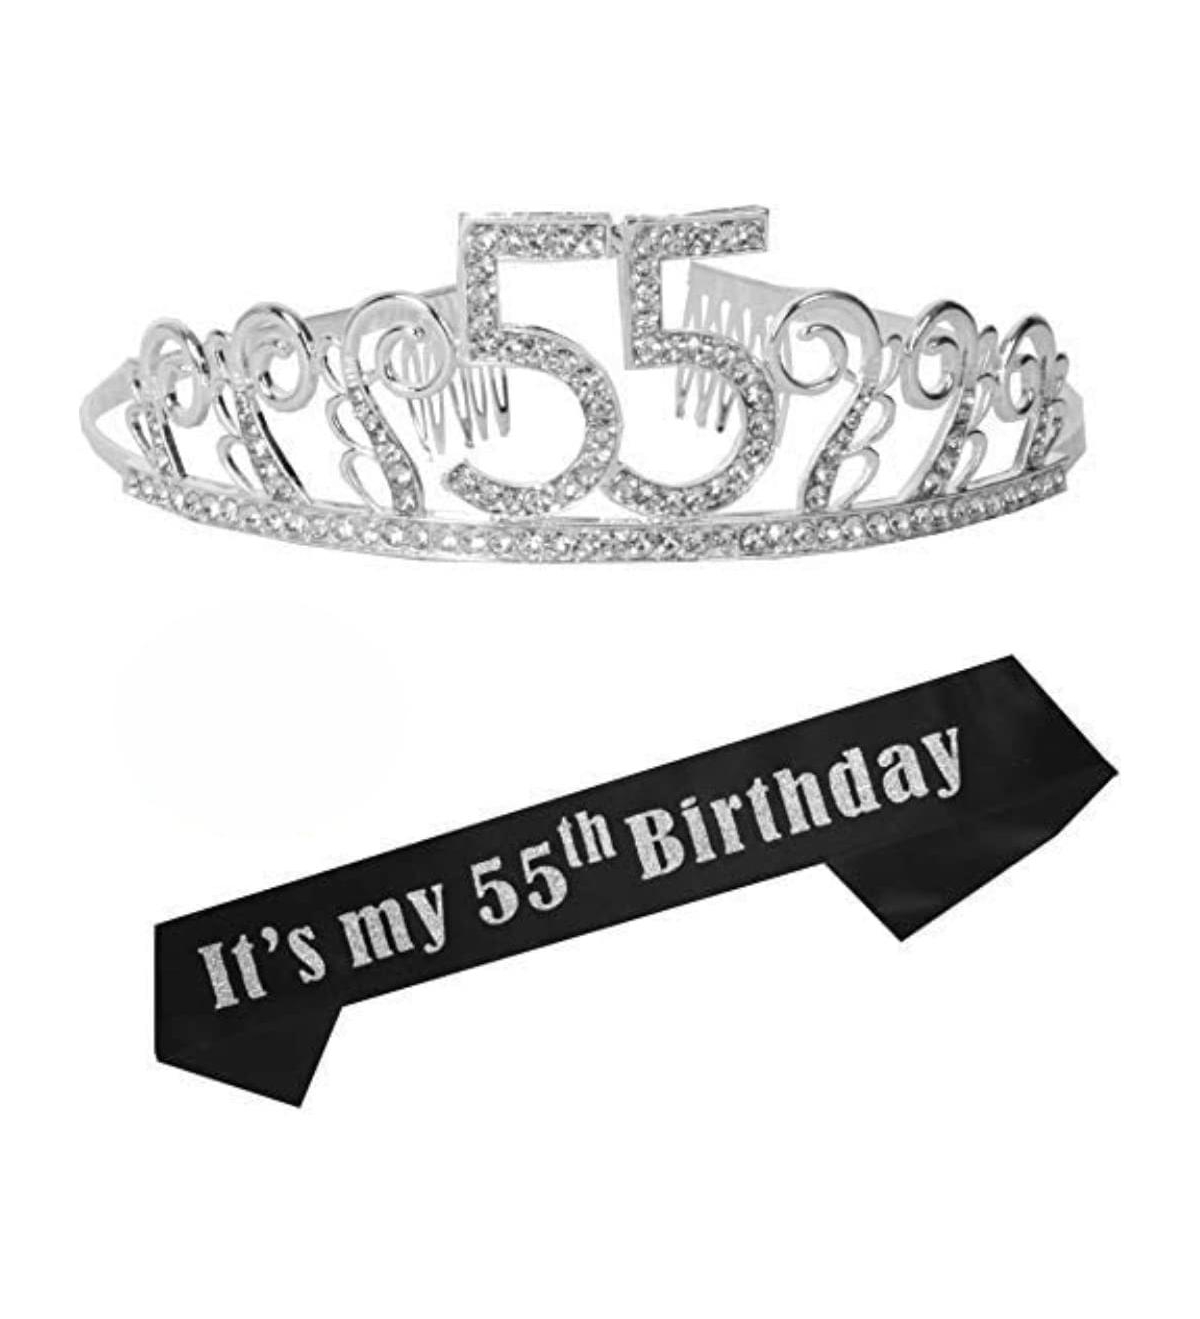 55th Birthday Sash and Tiara Set for Women - Sparkling Glitter Sash and Elegant Silver Metal Rhinestone Wave Tiara, Perfect 55th Birthday Party Access